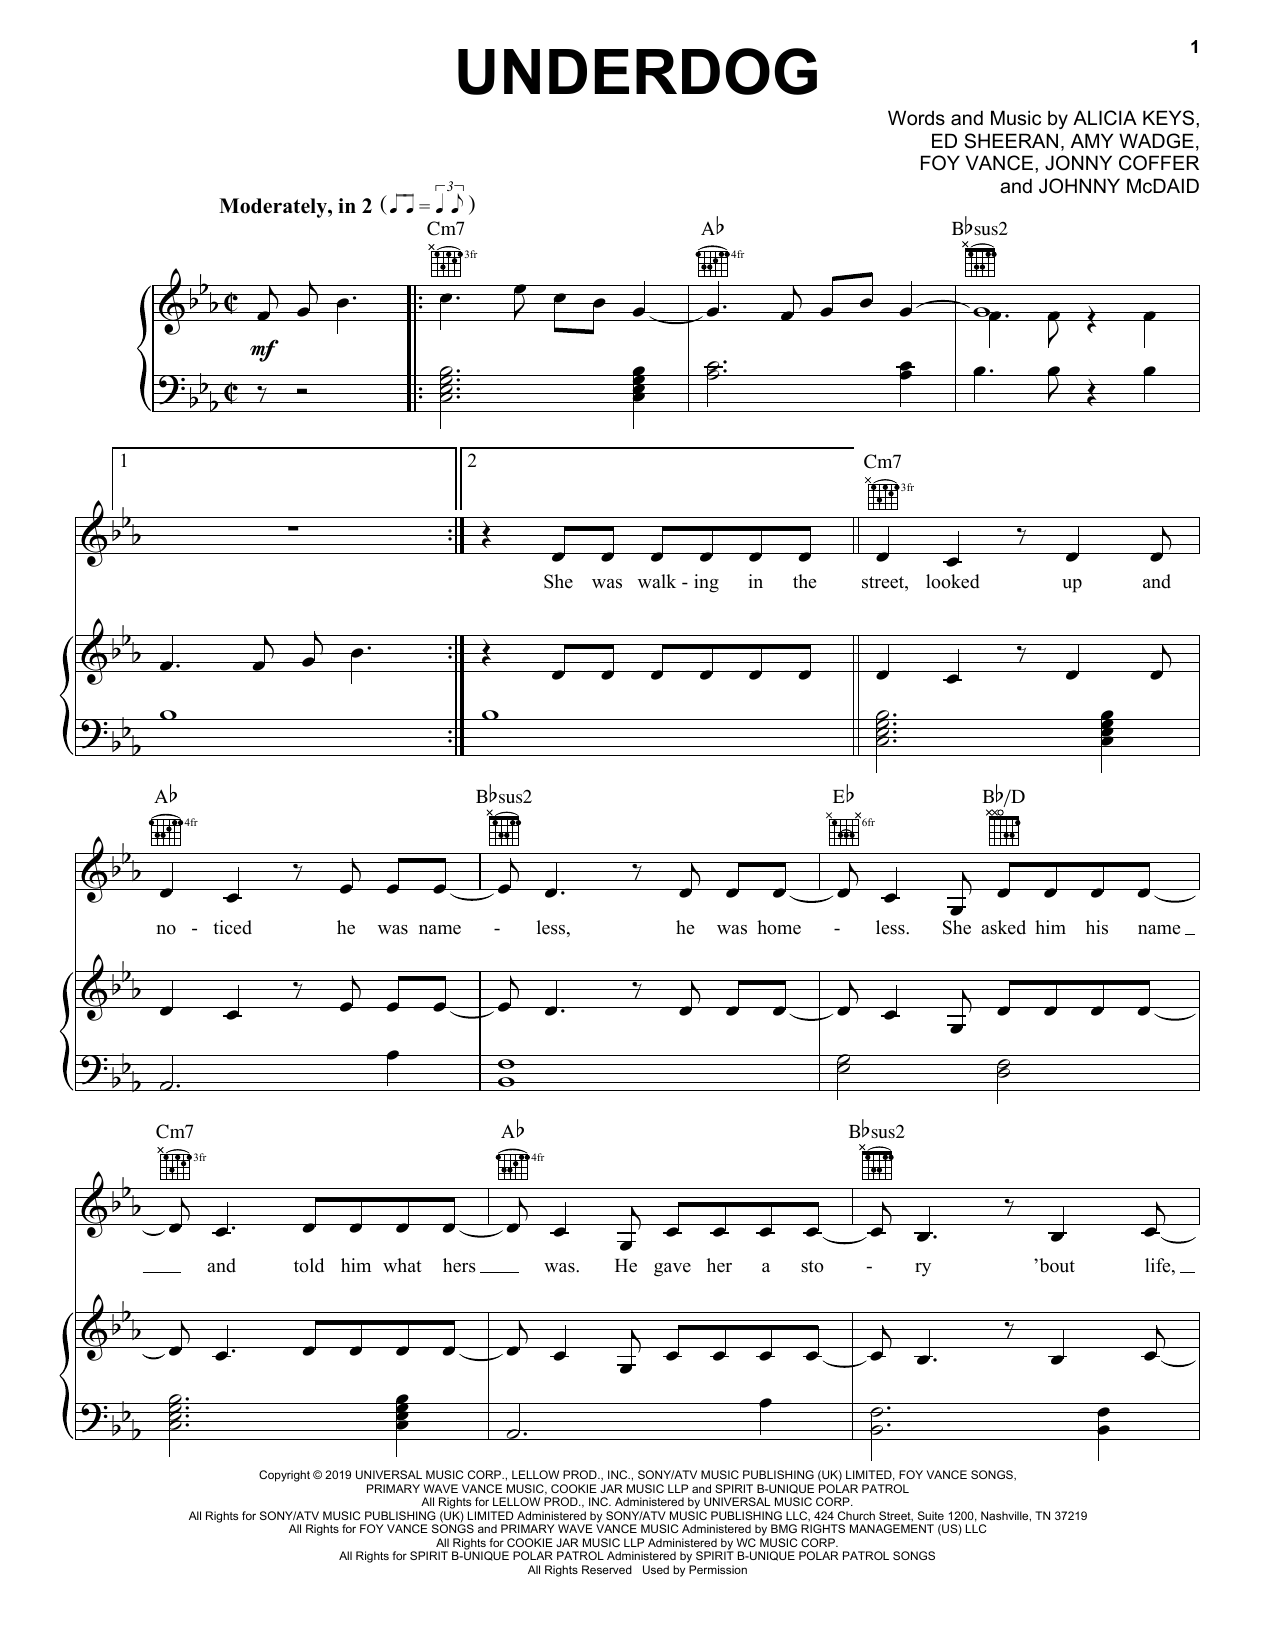 Alicia Keys Underdog Sheet Music Notes & Chords for Ukulele - Download or Print PDF